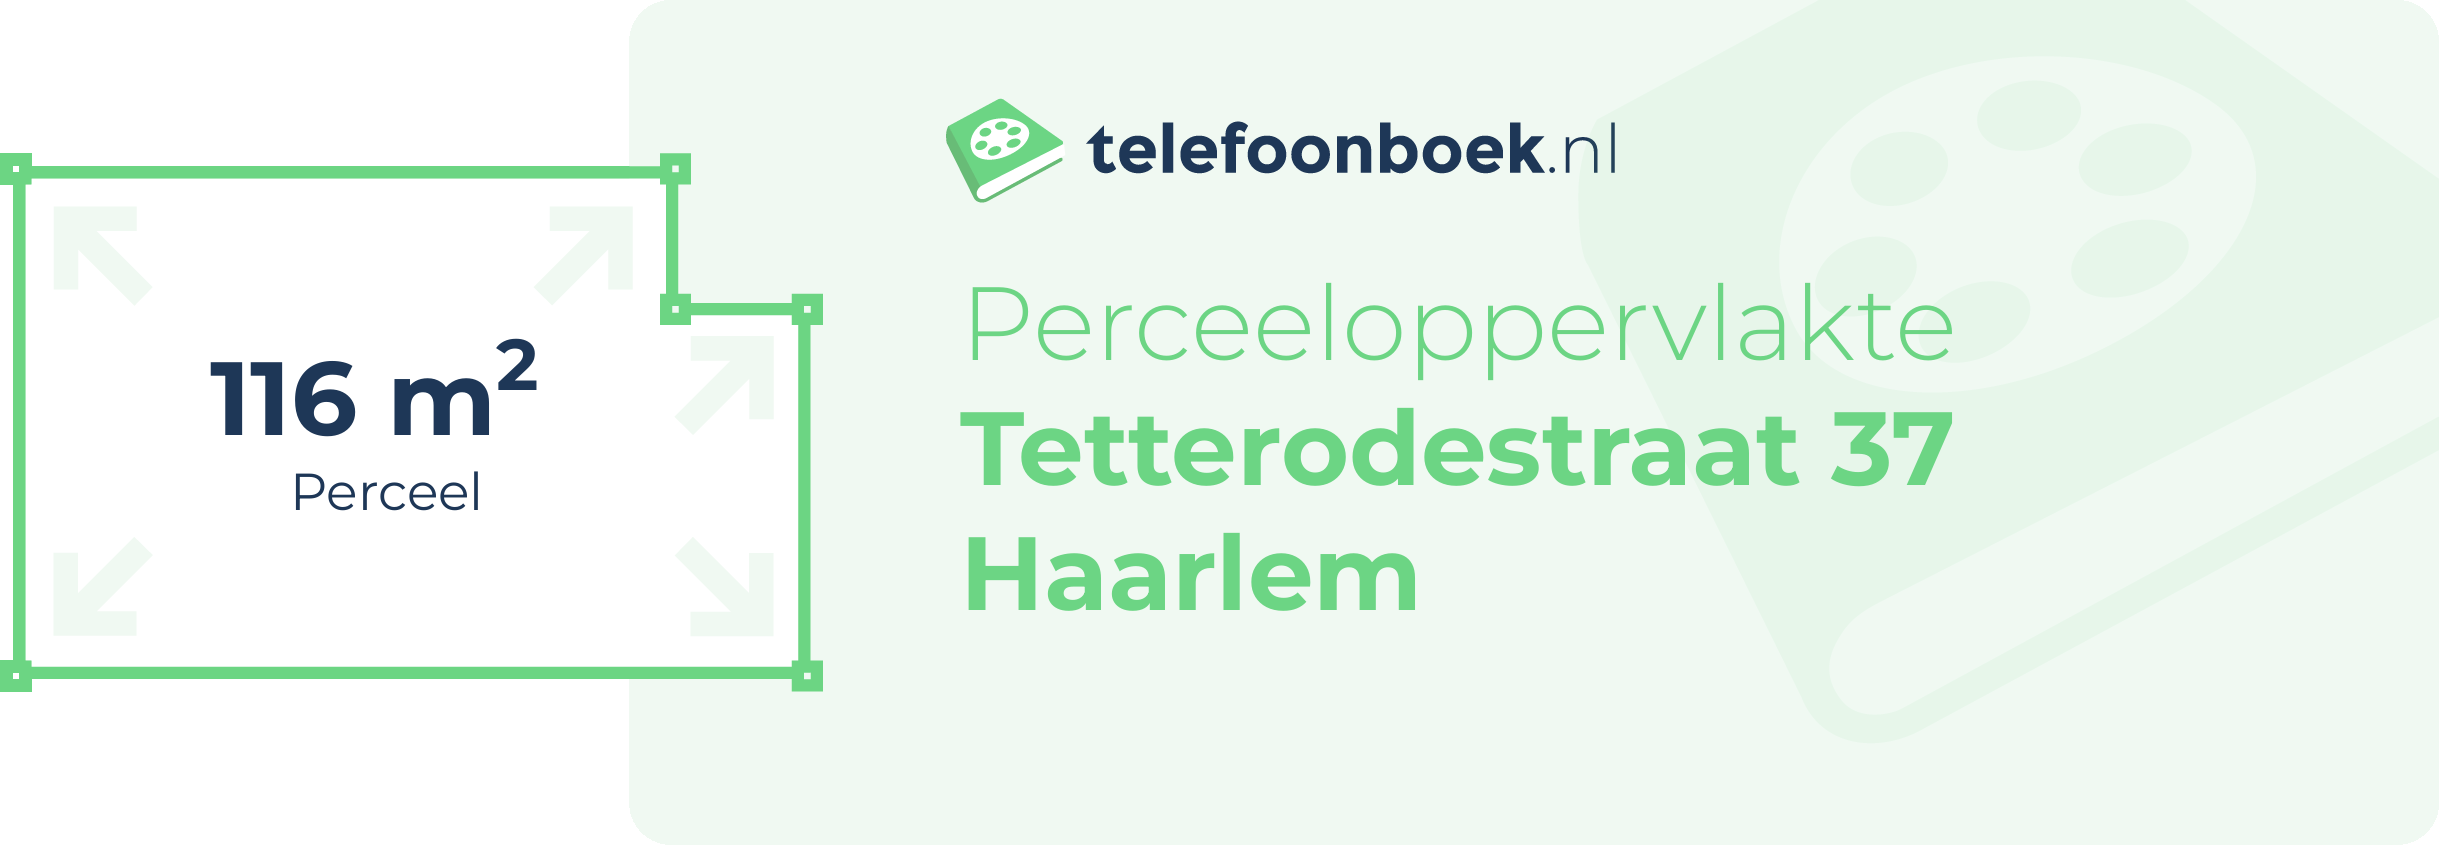 Perceeloppervlakte Tetterodestraat 37 Haarlem